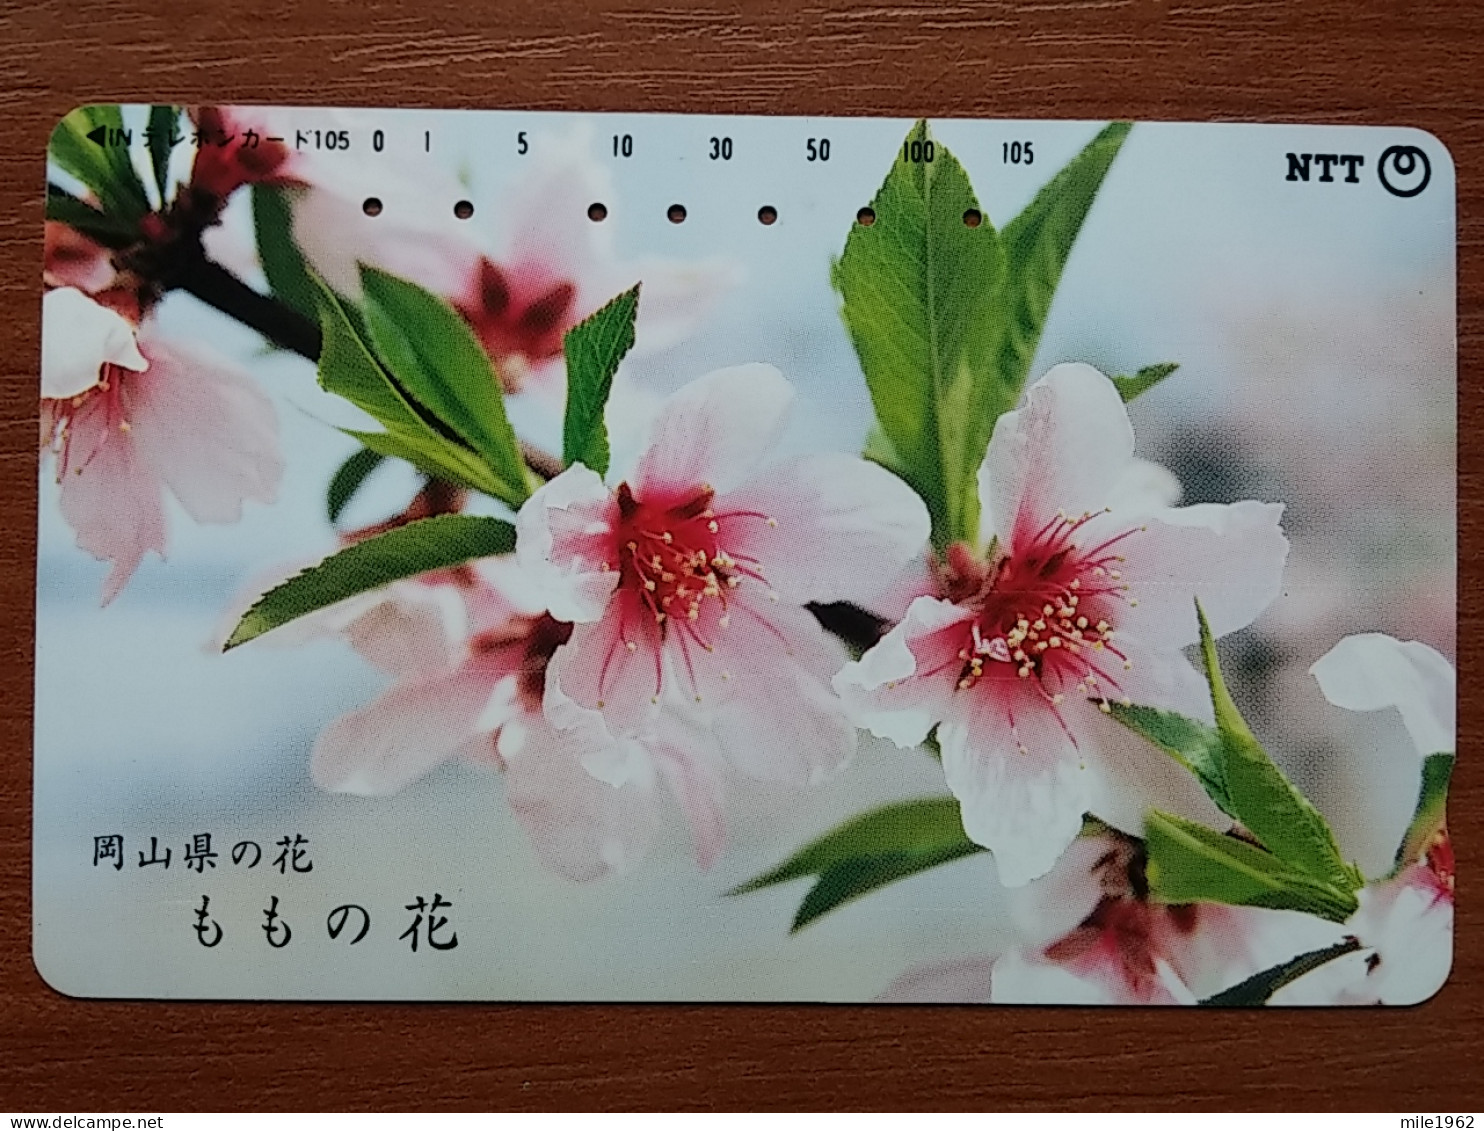 T-382 - JAPAN, Japon, Nipon, TELECARD, PHONECARD, Flower, Fleur, NTT 351-219 - Fiori